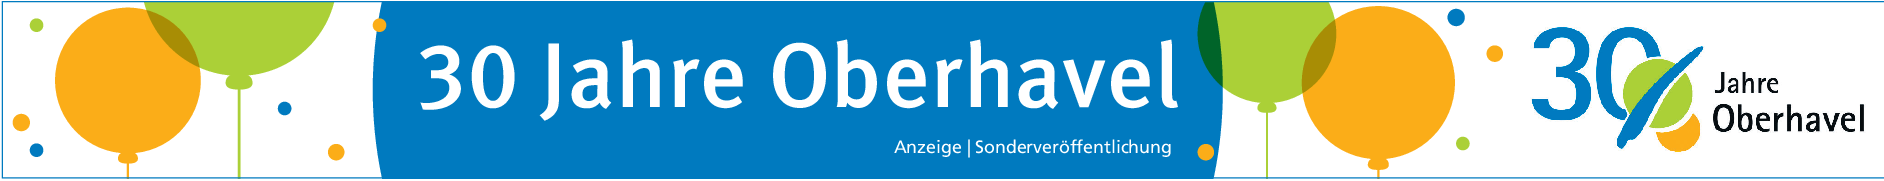 30 Jahre Oberhavel-Fest am 23. September: Herzlichen Glückwunsch Oberhavel!